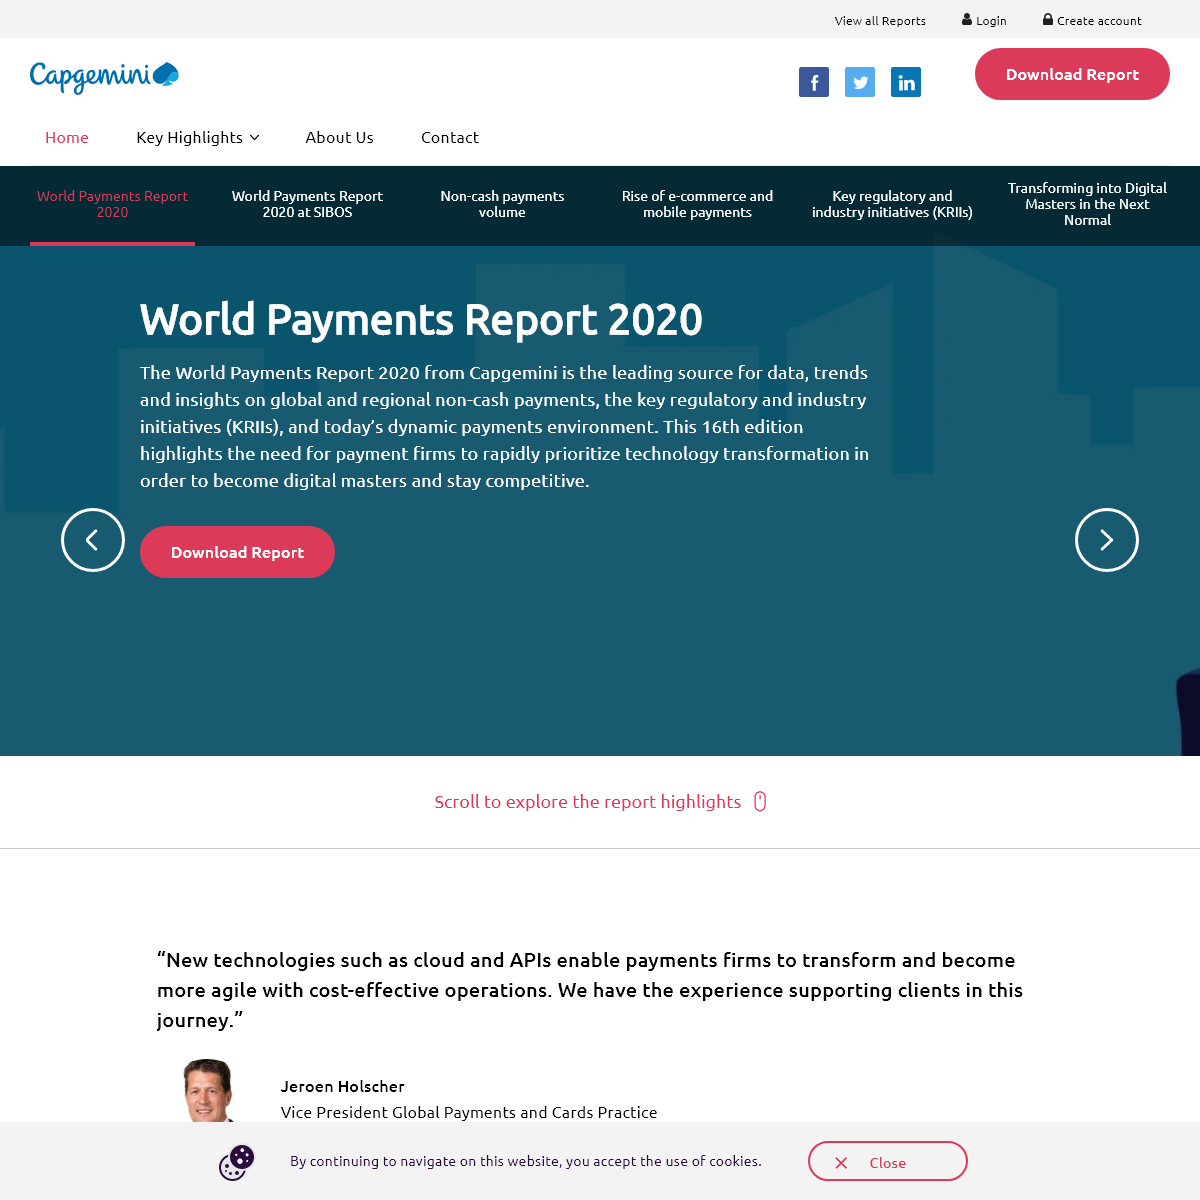 A complete backup of worldpaymentsreport.com